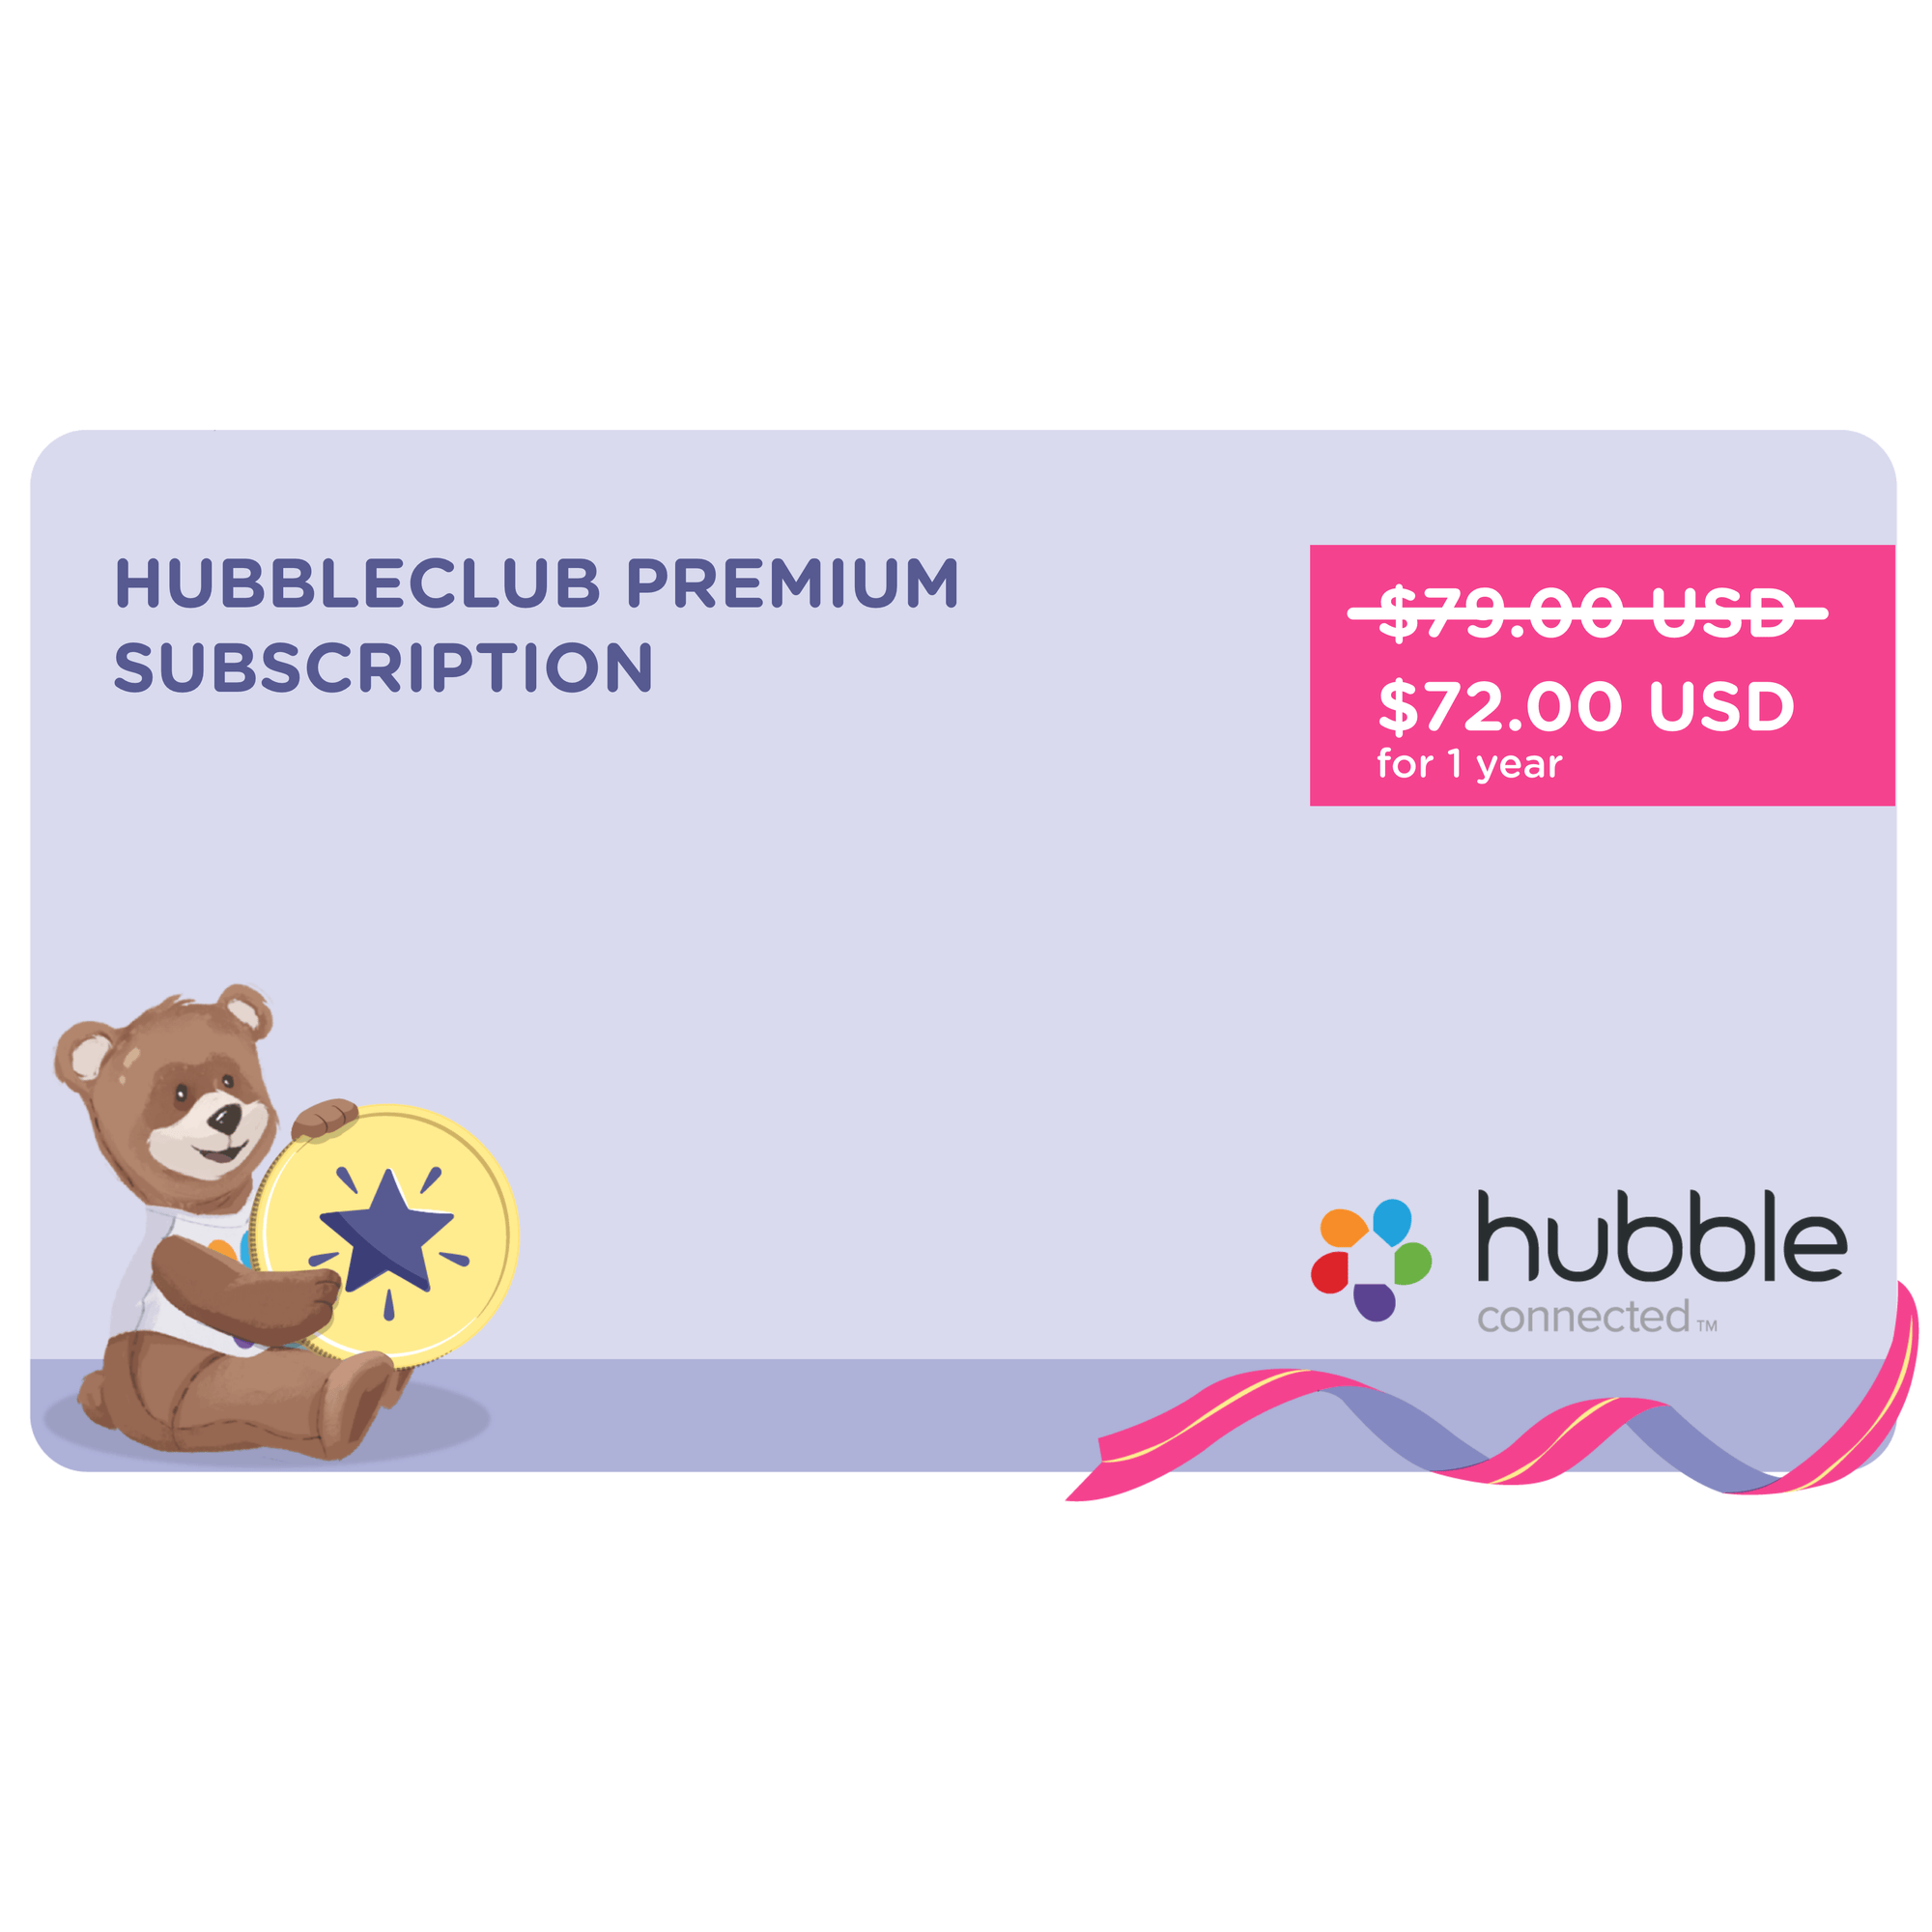 HubbleClub Premium - 1 Year Subscription